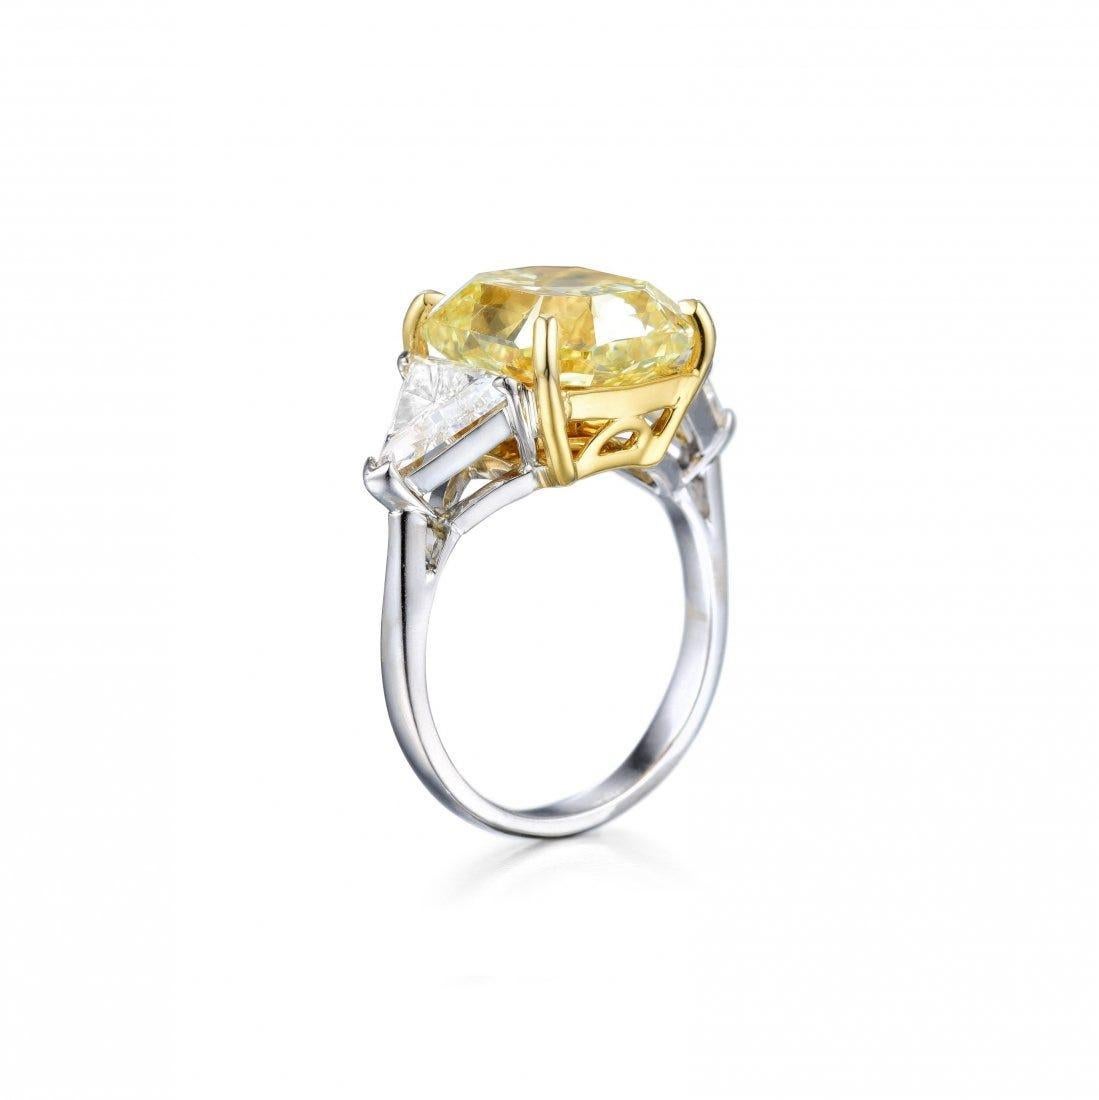 GIA Certified 5.06 Carat Fancy Vivid Yellow Diamond Ring, side stones are .50 carat trillion cut diamonds.